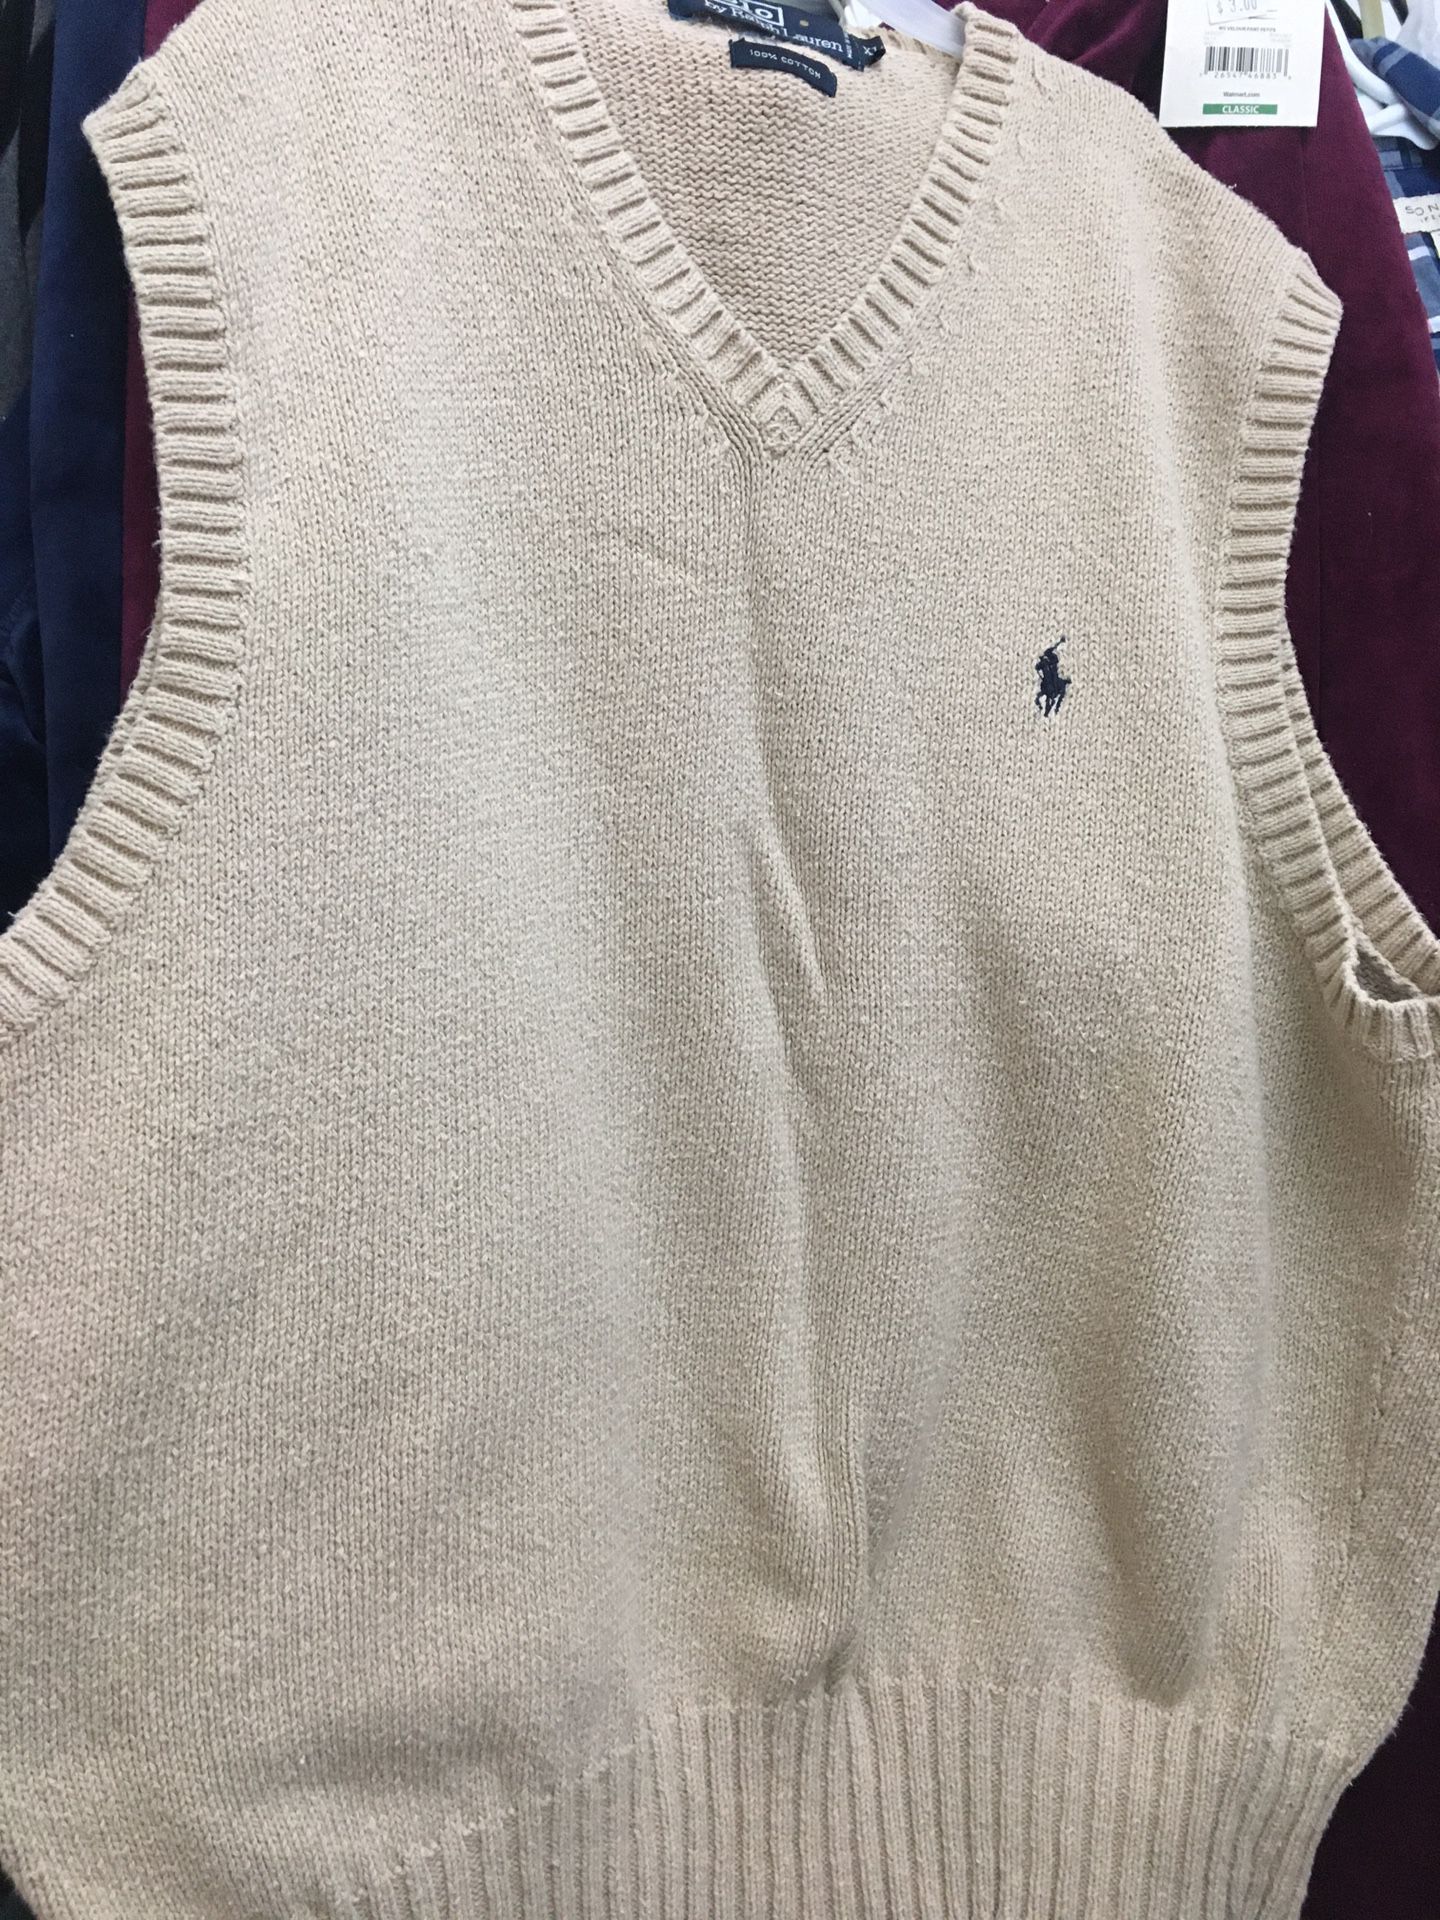 Polo Ralph Lauren Polo Sweater Vest 